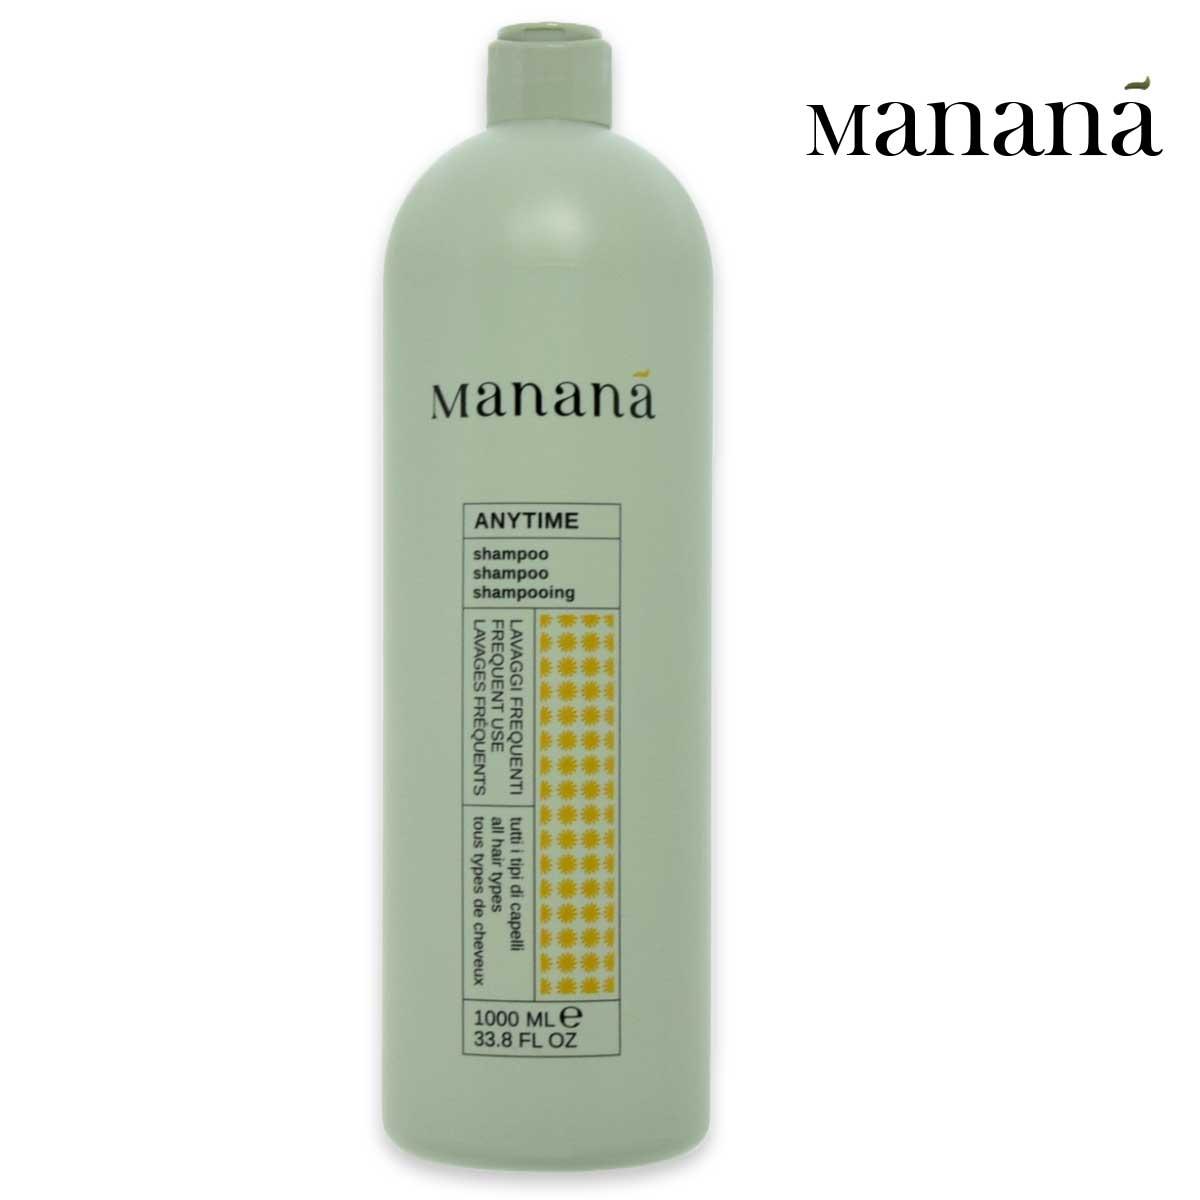 MananÀ anytime shampoo 1000 ml